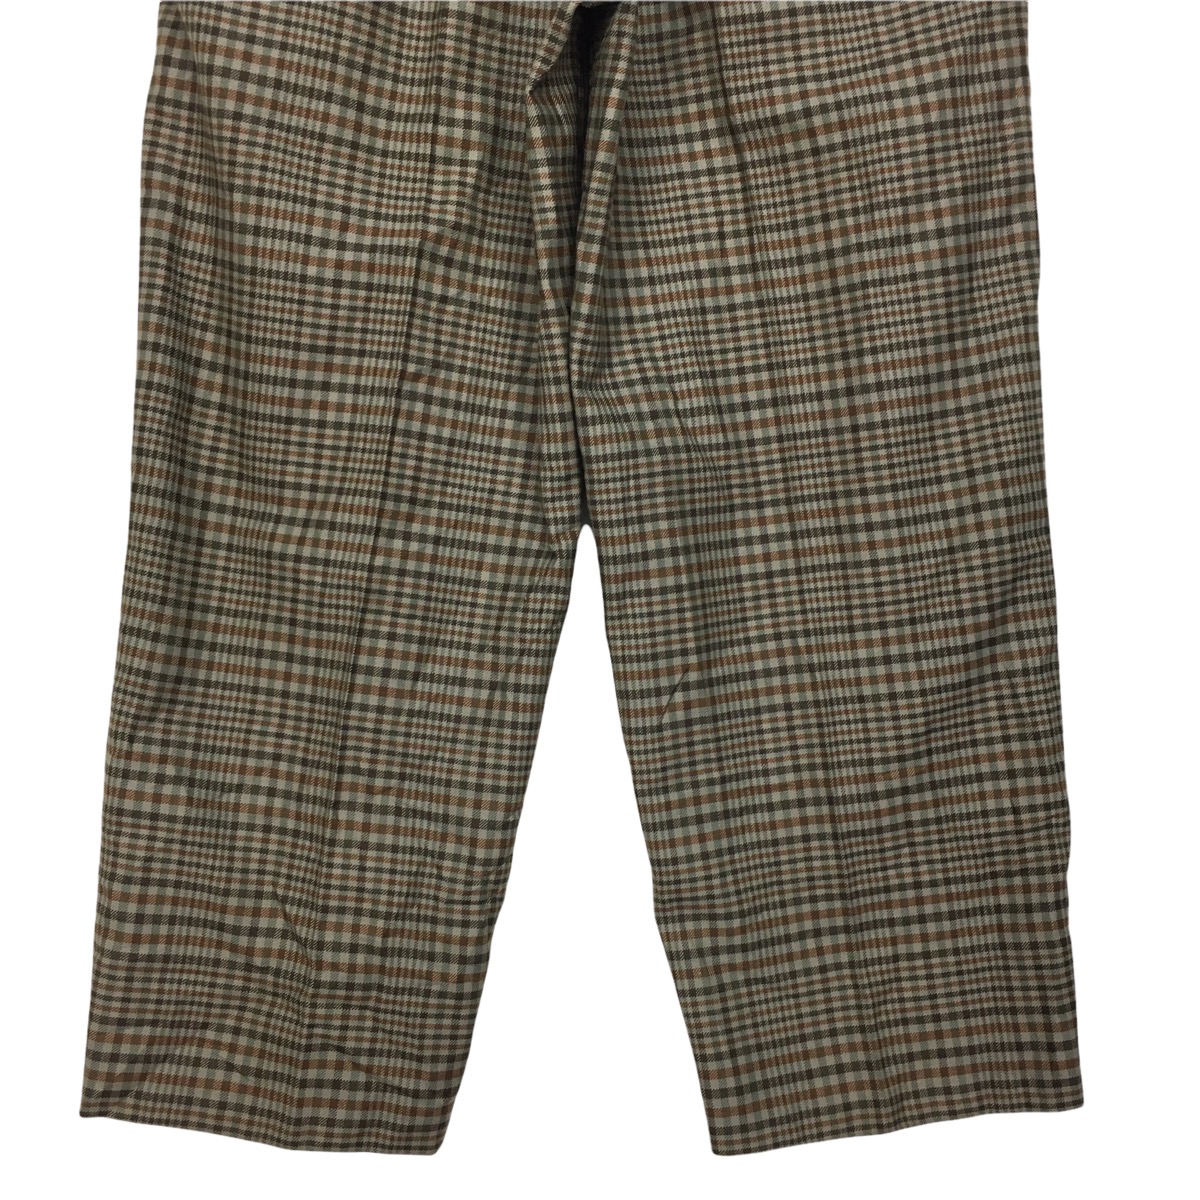 JULIUS JAPAN The Original Plaid Pants Trousers Casual Pants - 6